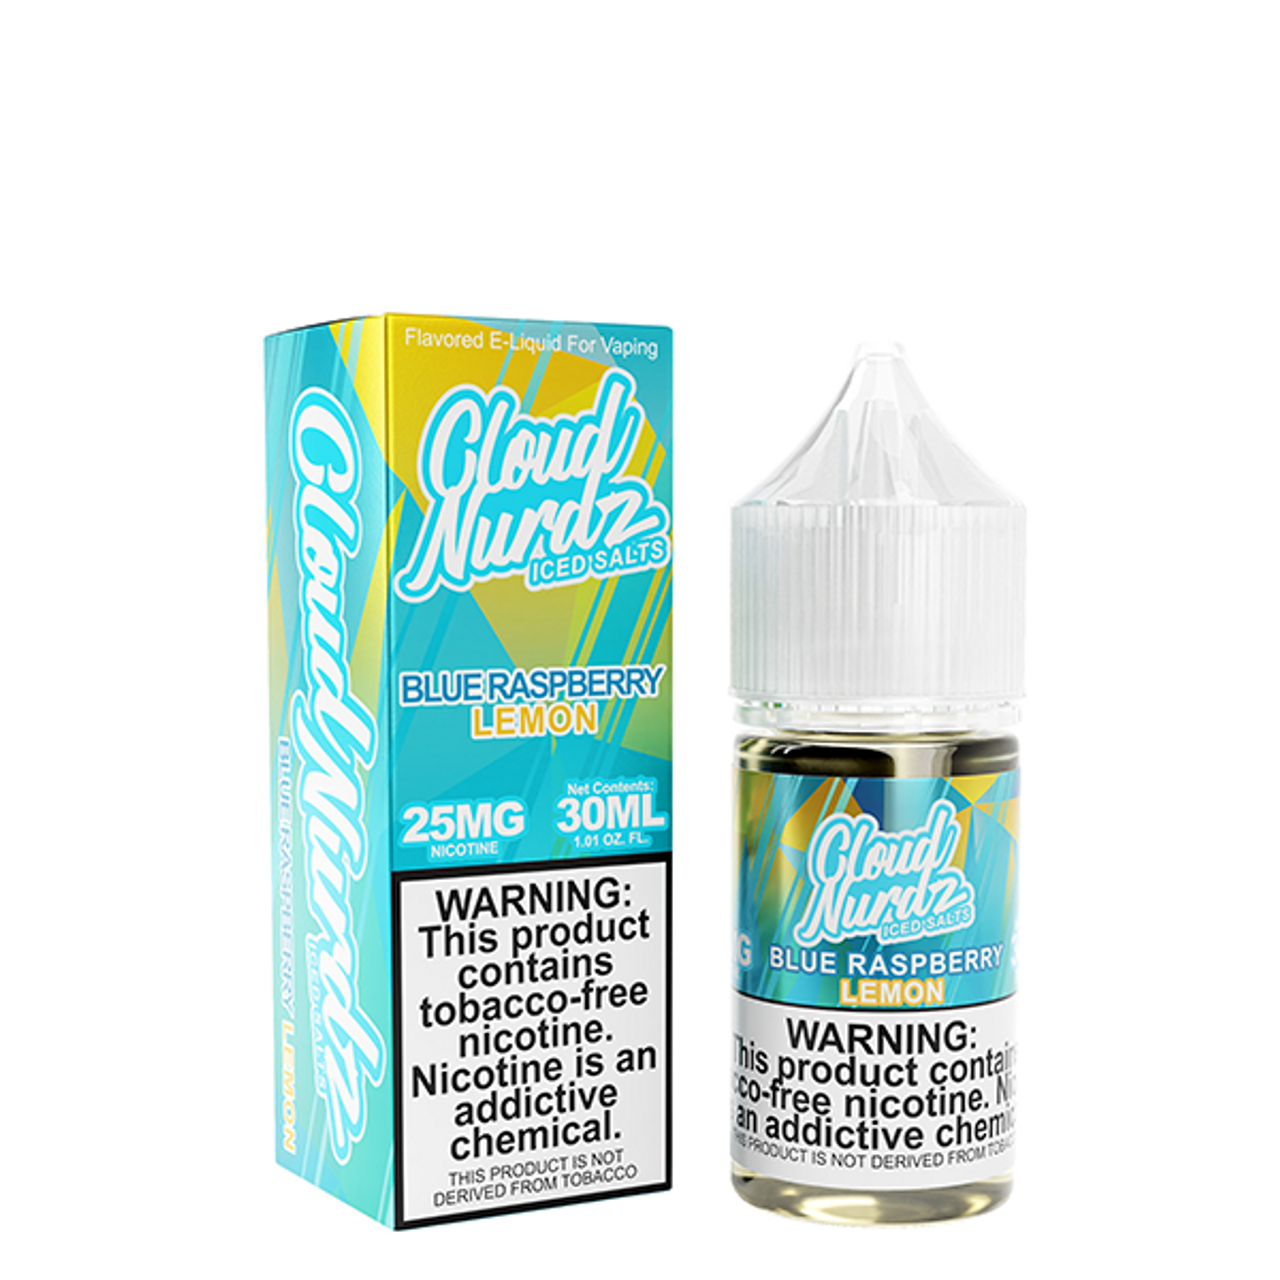 Blue Raspberry Lemon Iced by Cloud Nurdz Salts TFN Tobacco-Free Nicotine - 30ml